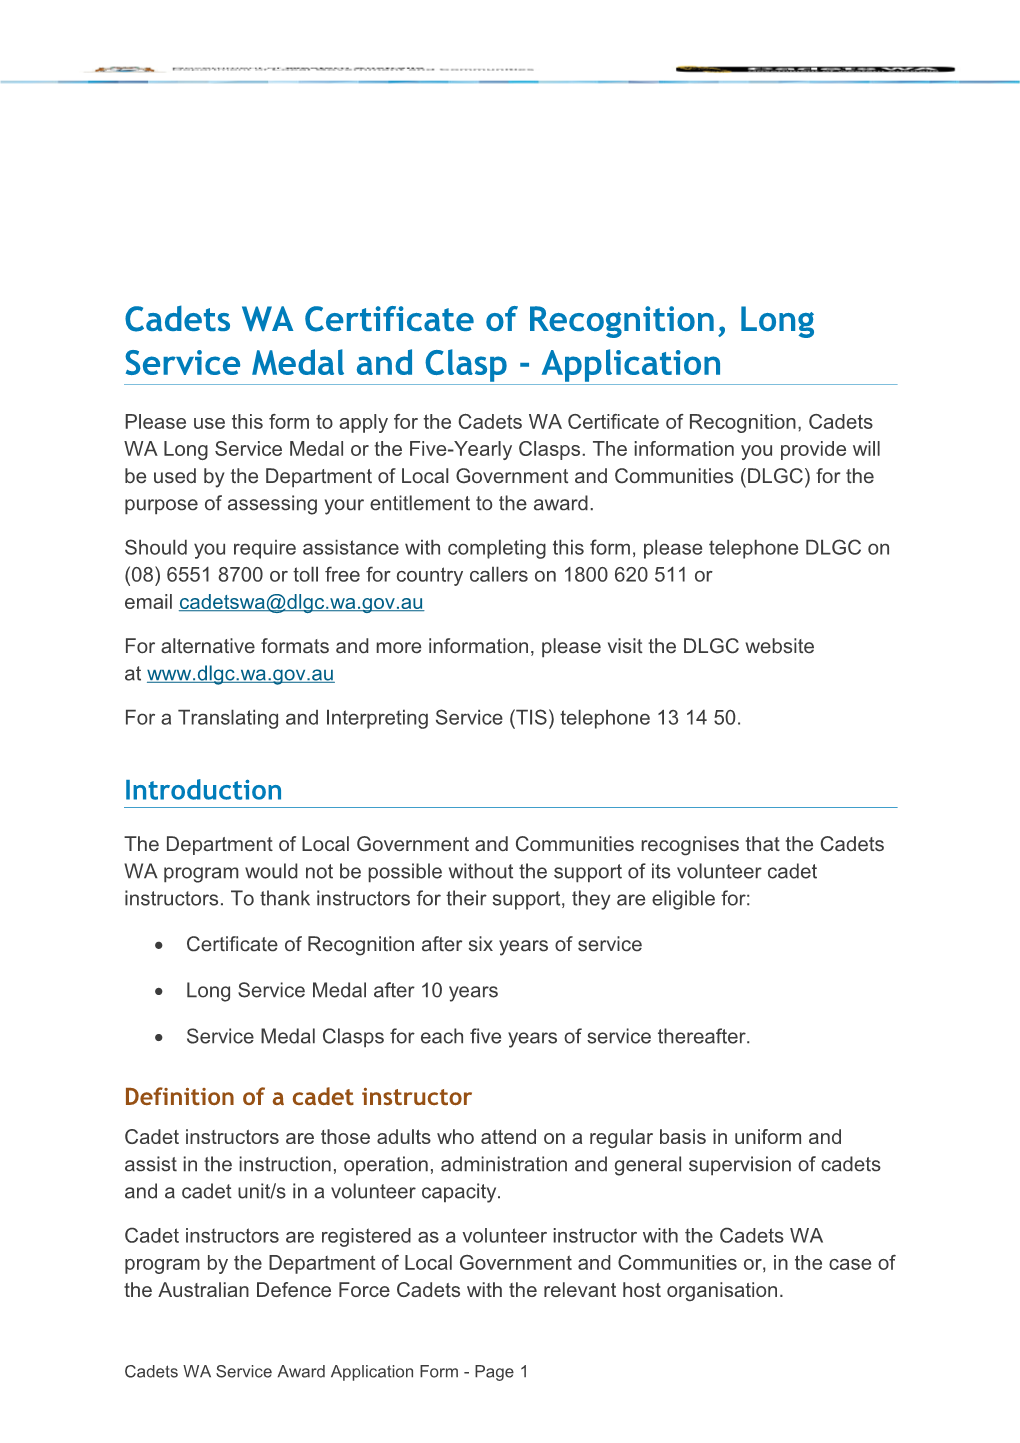 Cadets WA Service Award - Application Form